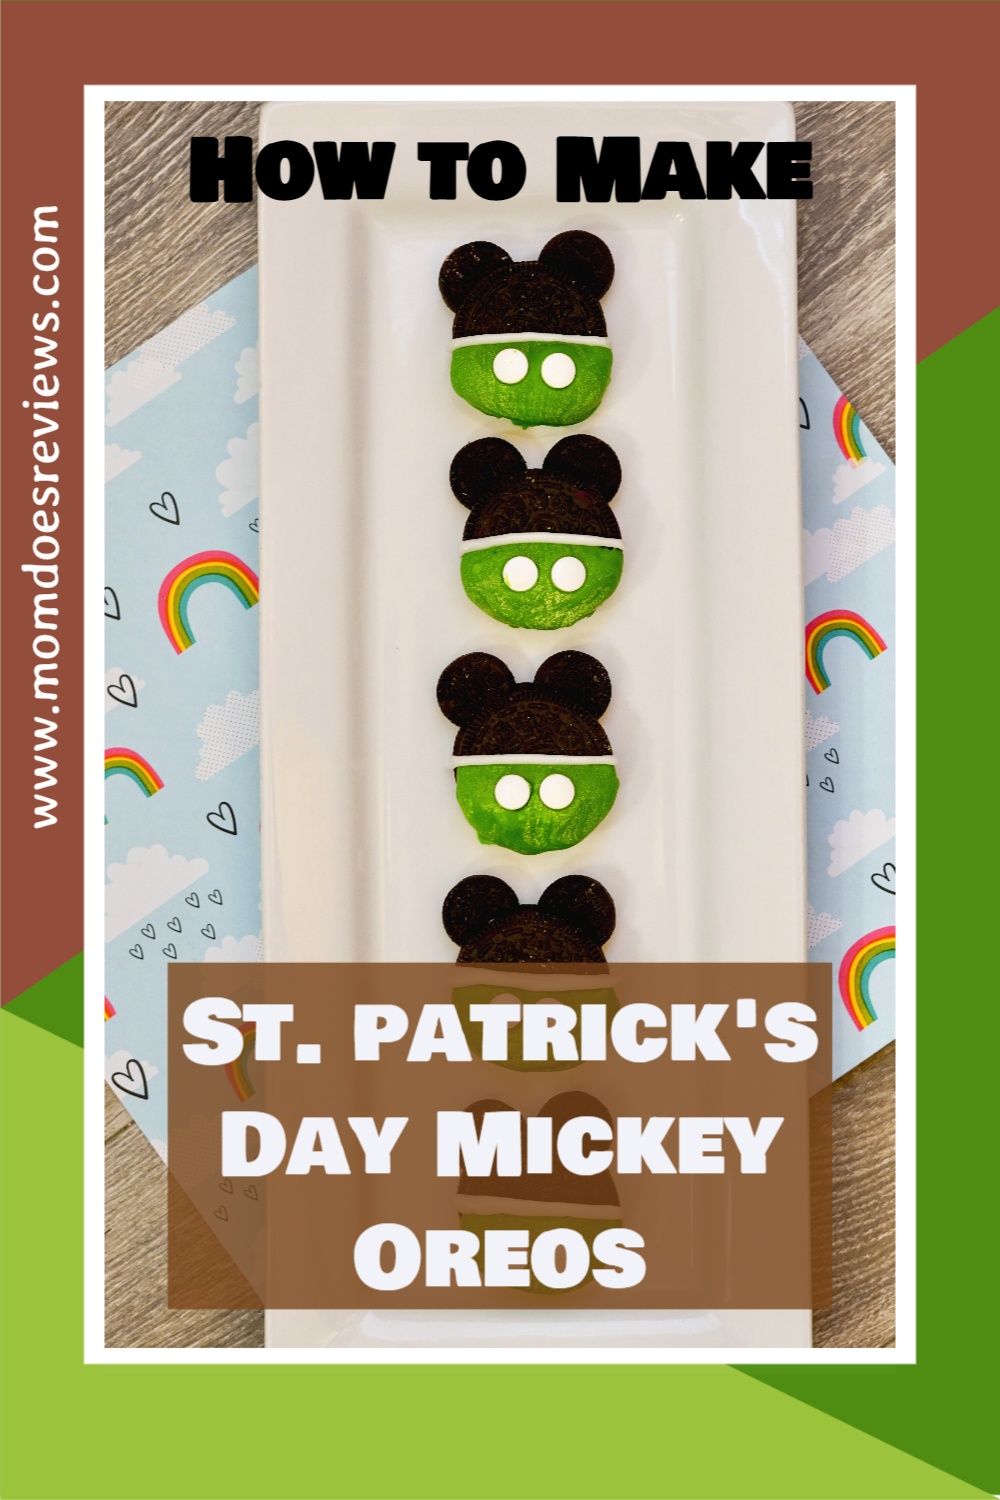 St. Patrick’s Day Mickey OREOS #cookies #funfood #mickeymouse